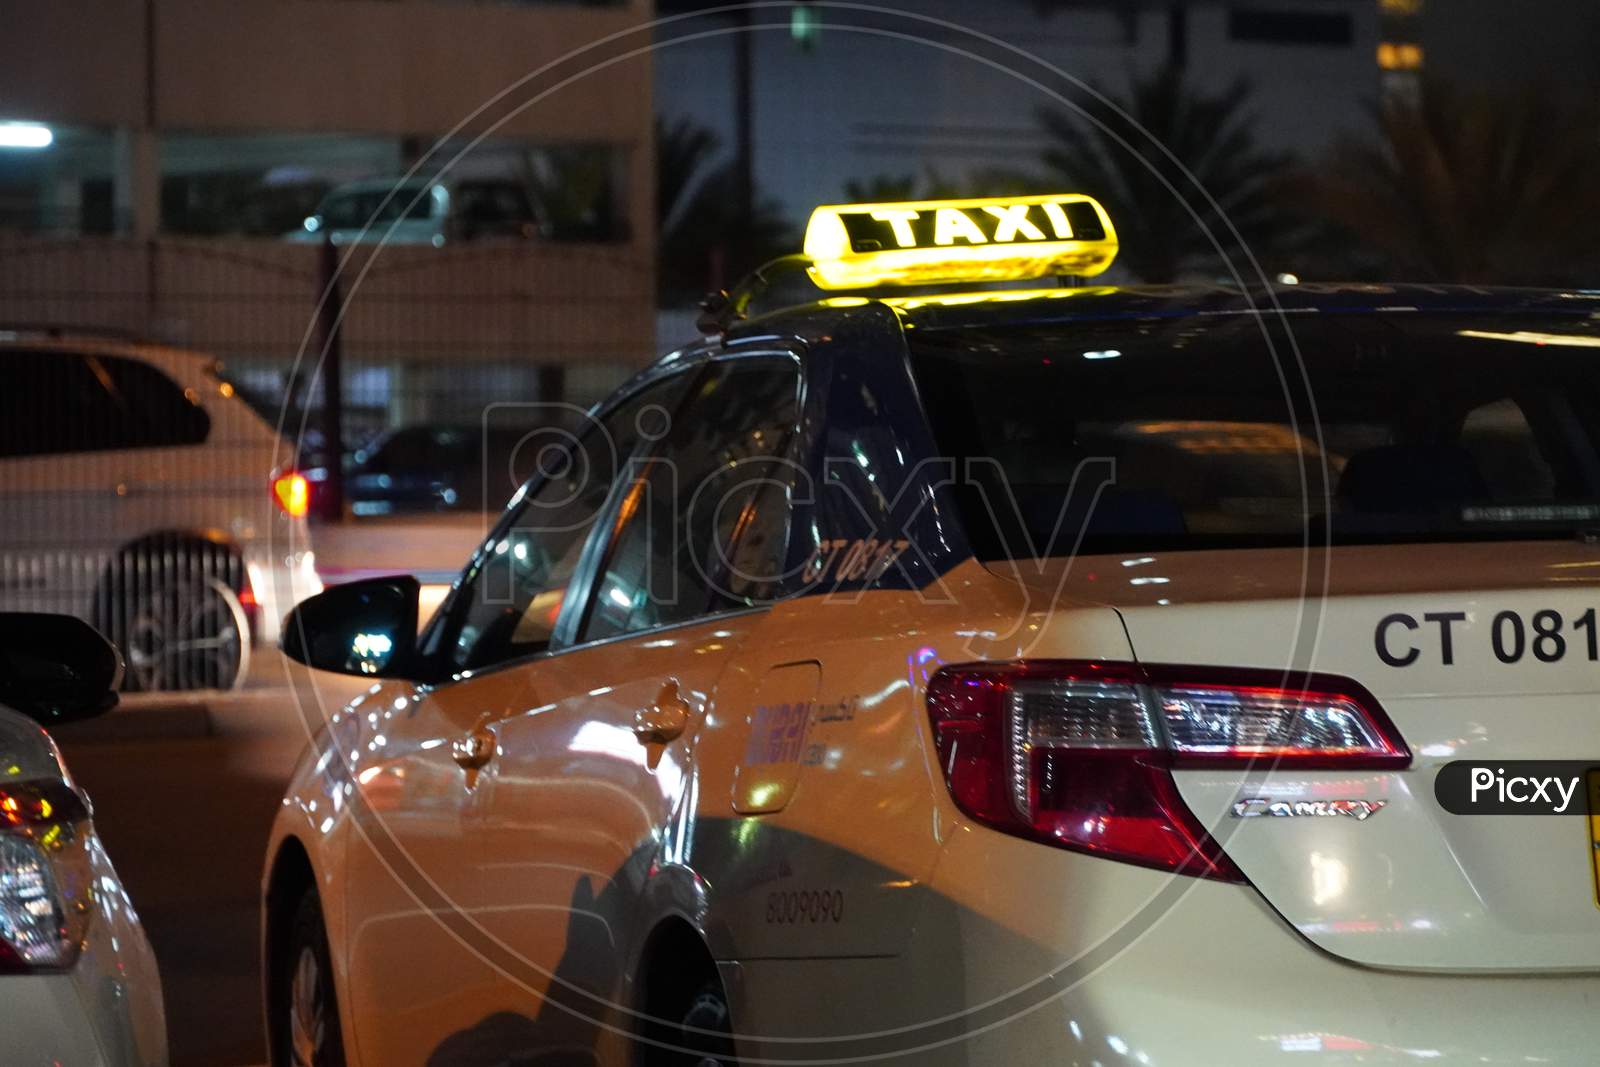 Dubai Uae - November 2019: Dubai Public Taxi Is Parked In A Parking Lot At Night. Taxi In The City Of Dubai - Dubai Has An Extensive Taxi System Rta.